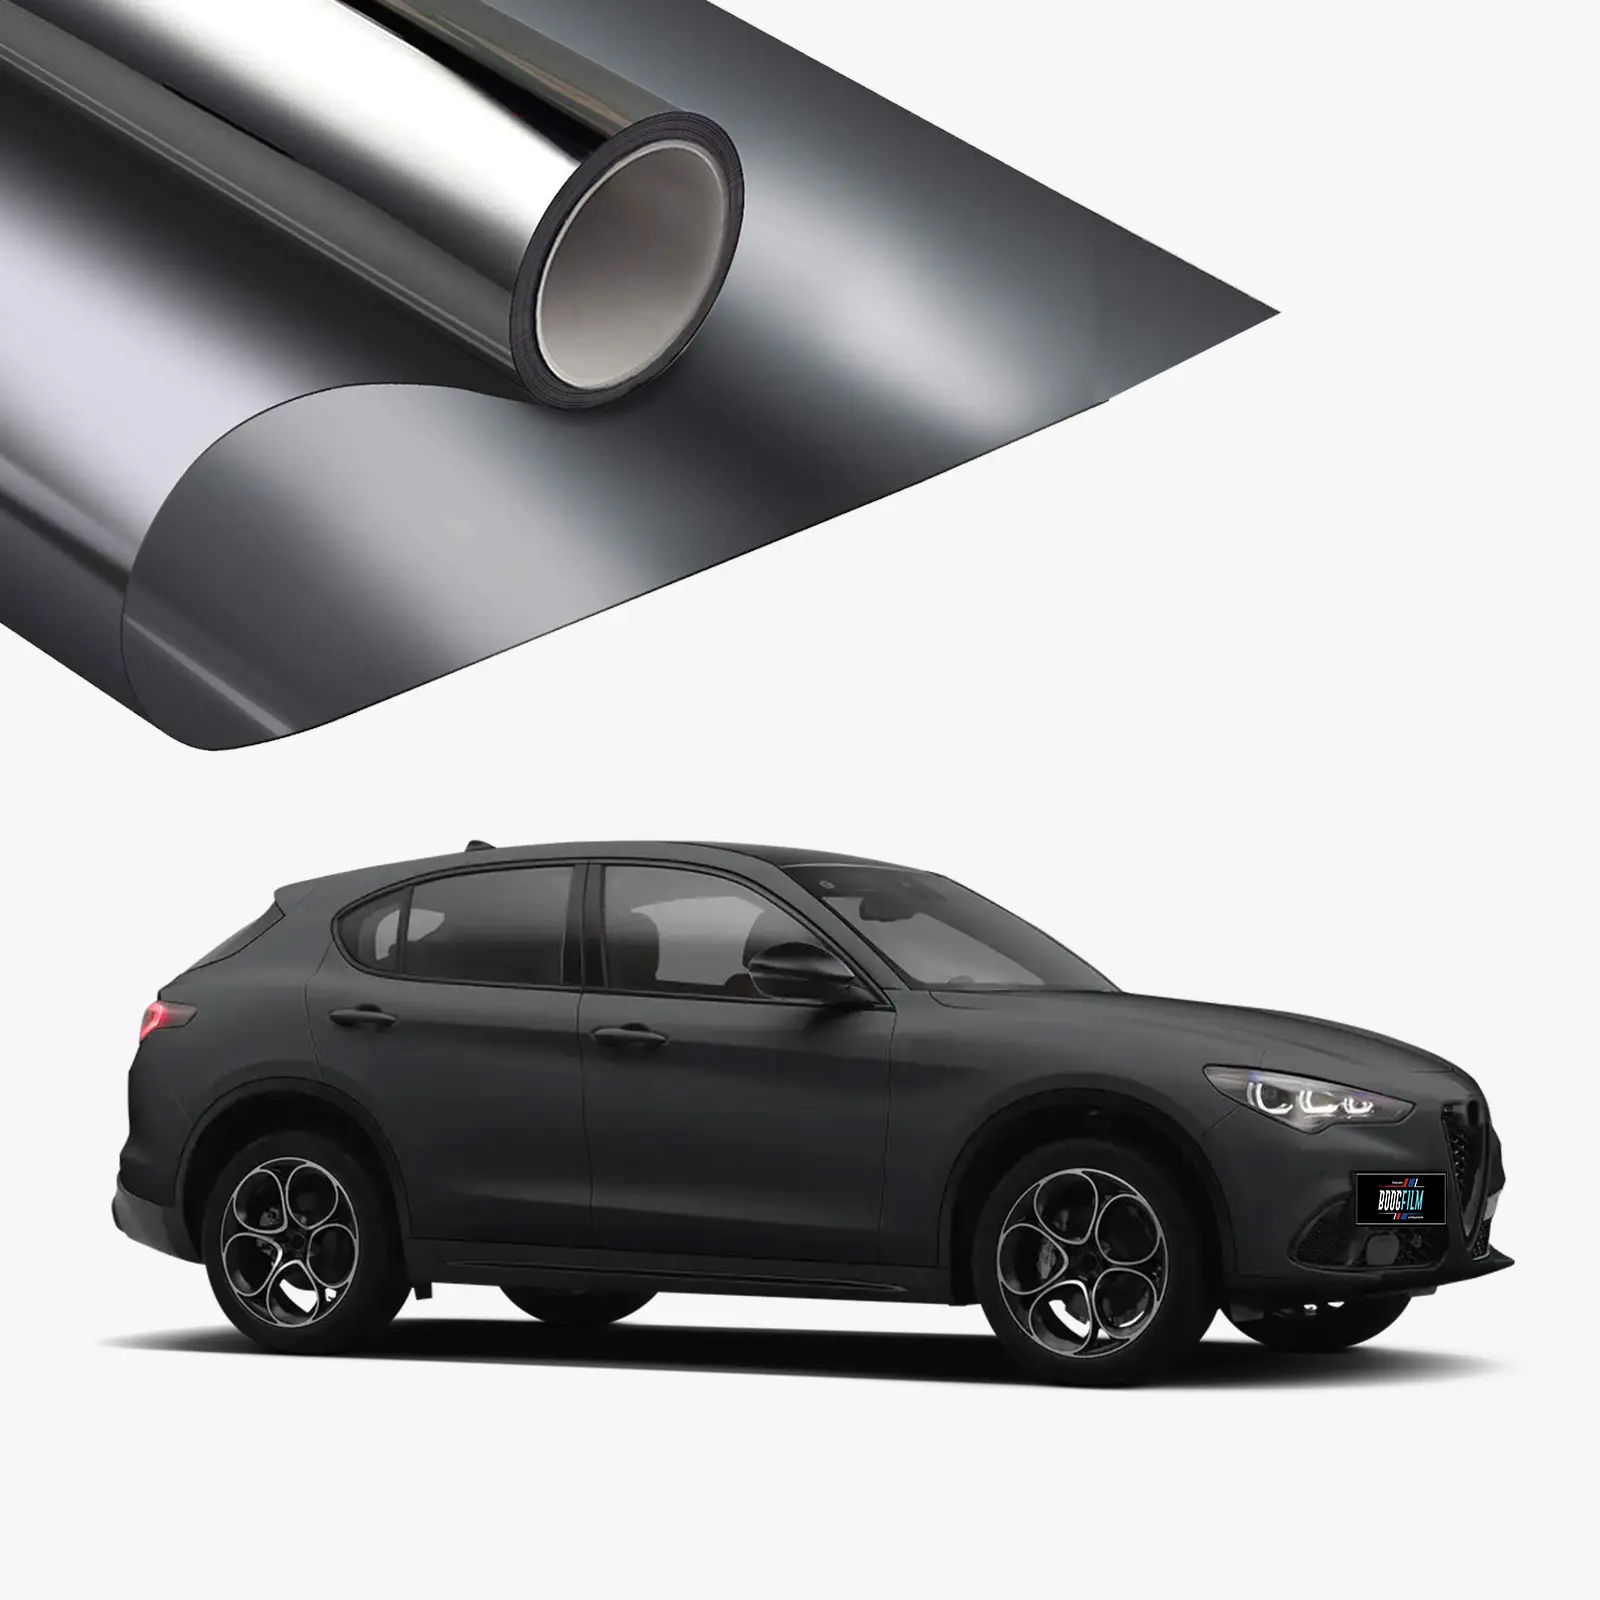 OEM 자동차 창 착색 차량 창 색조 원래 색상 카본 블랙 열 거부 초박형 1 플라이를 설치하기 쉽습니다.